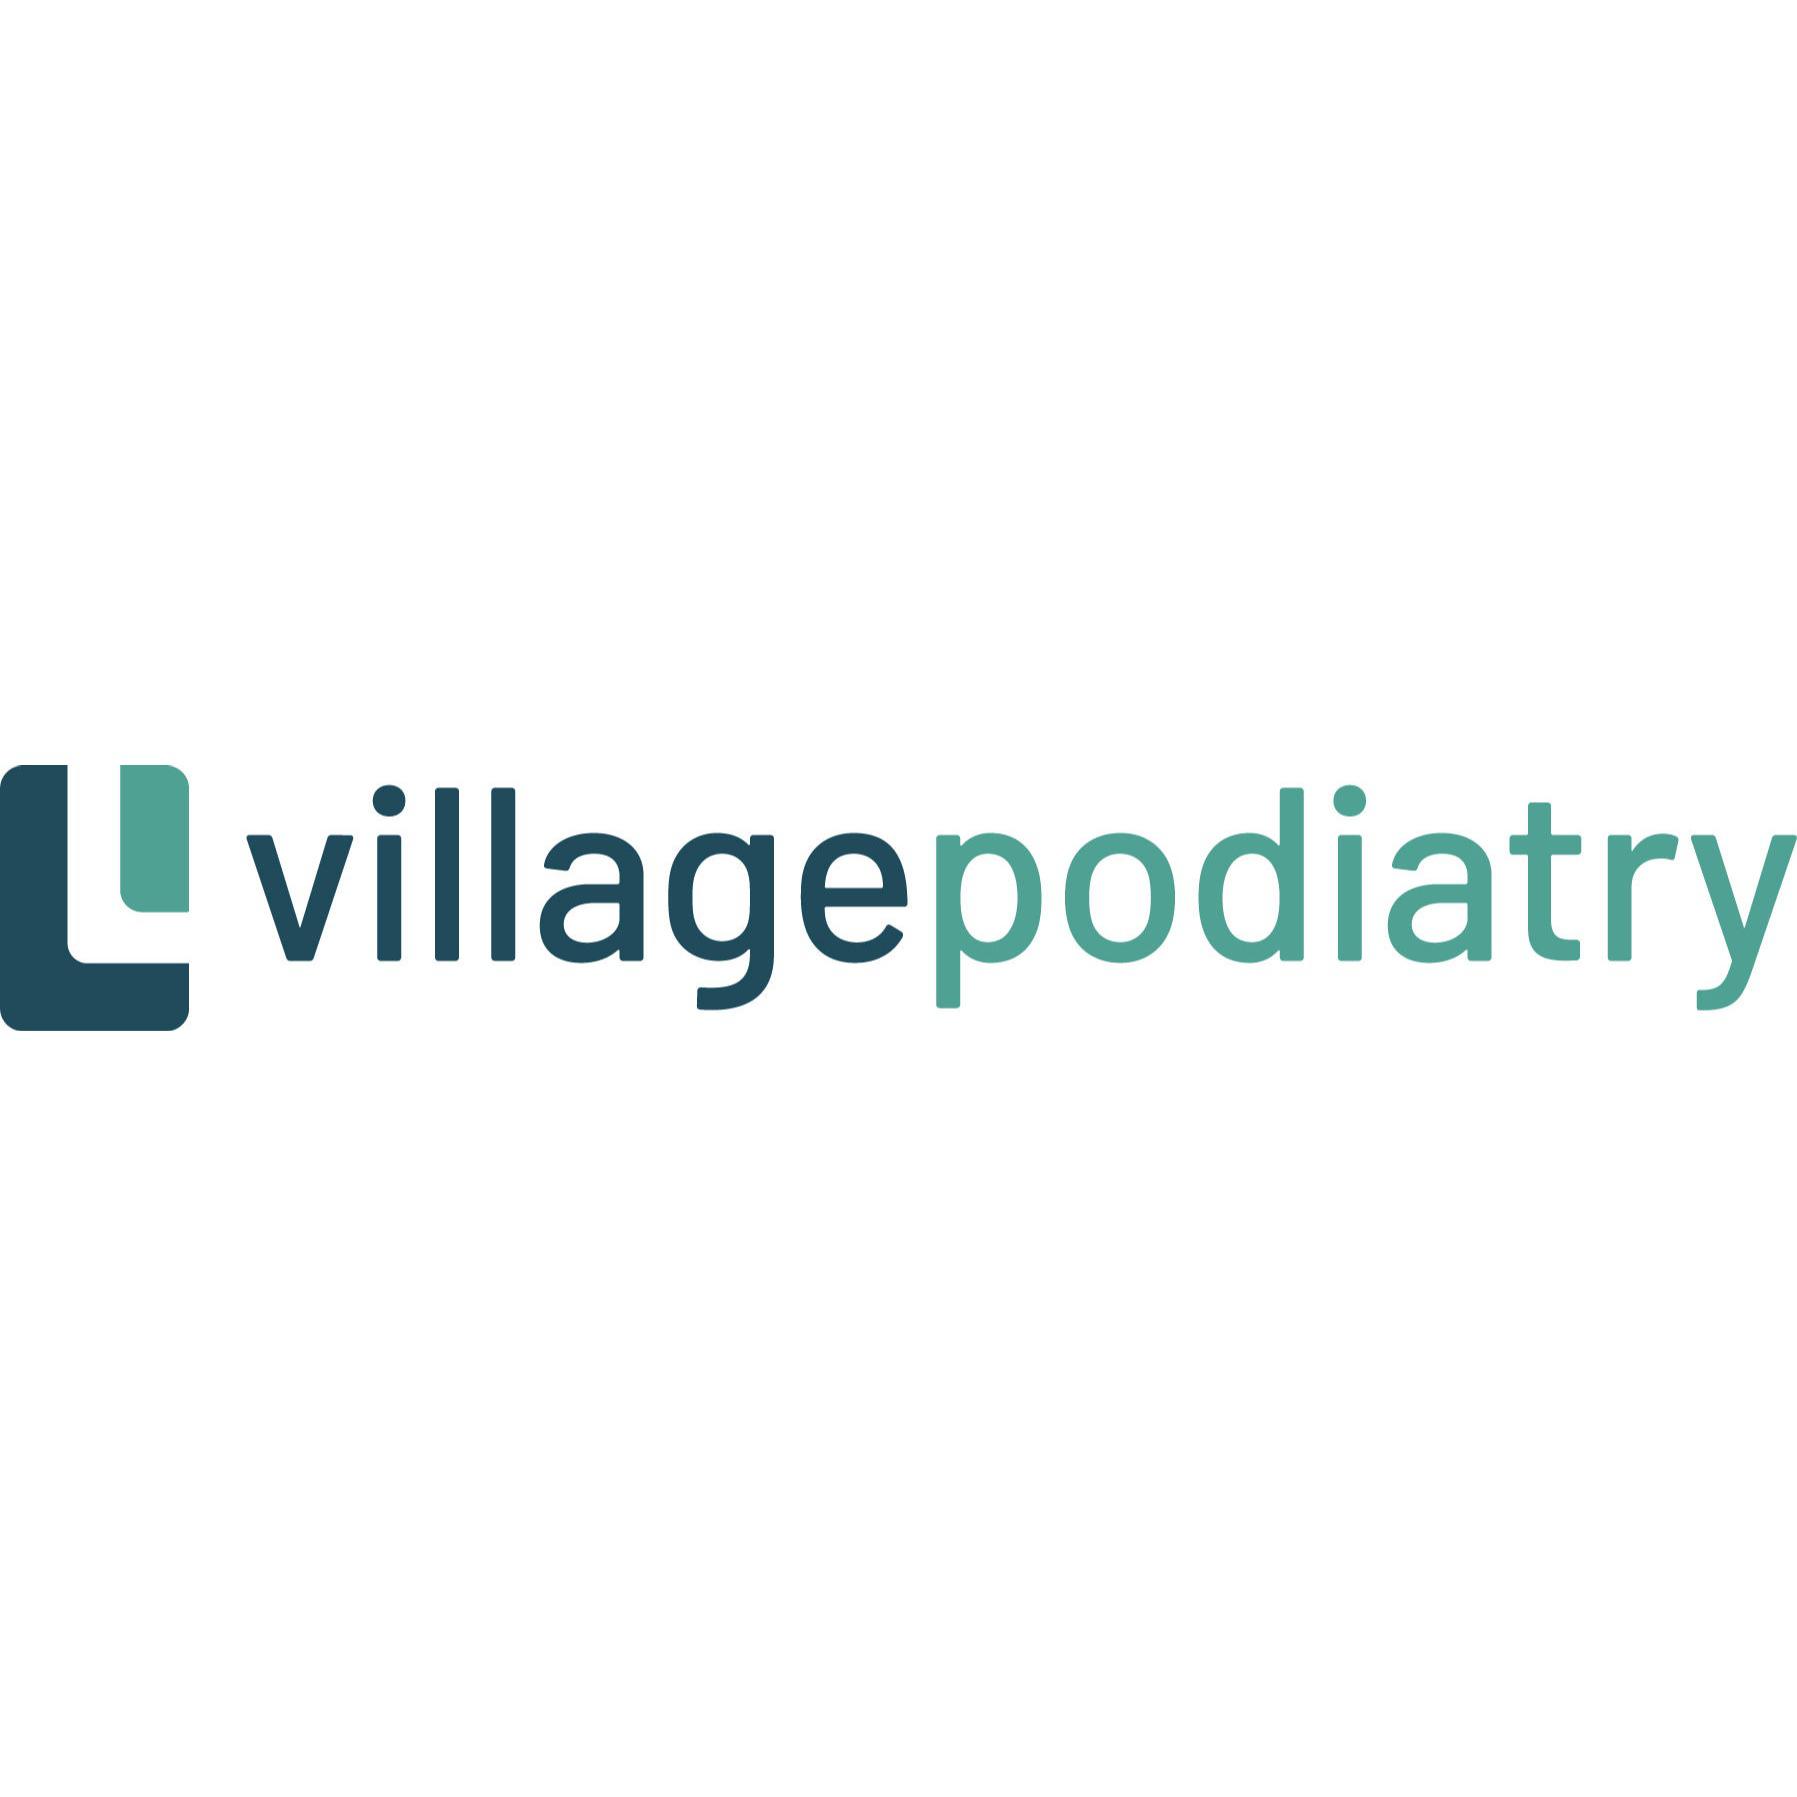 Village Podiatry